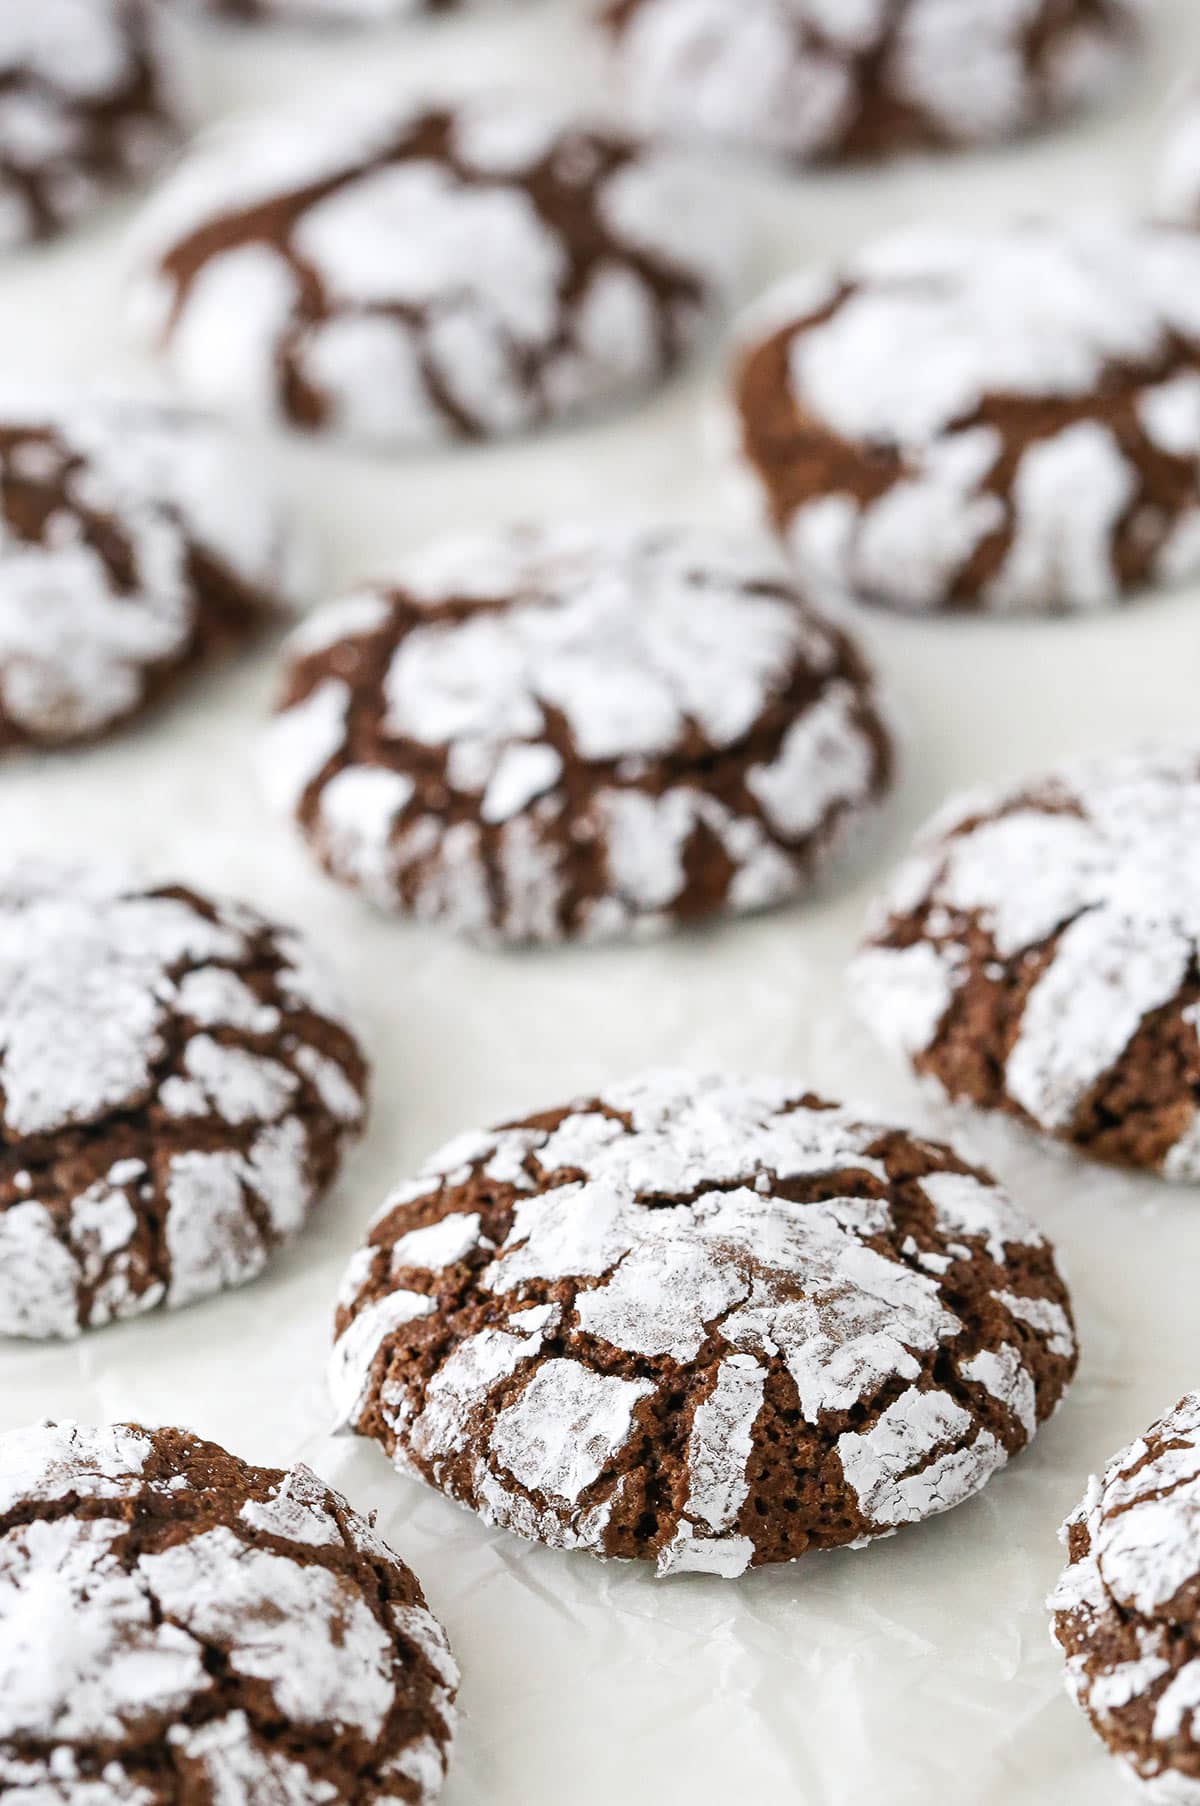 https://www.lifeloveandsugar.com/wp-content/uploads/2017/09/Chocolate-Crinkle-Cookies1-1.jpg